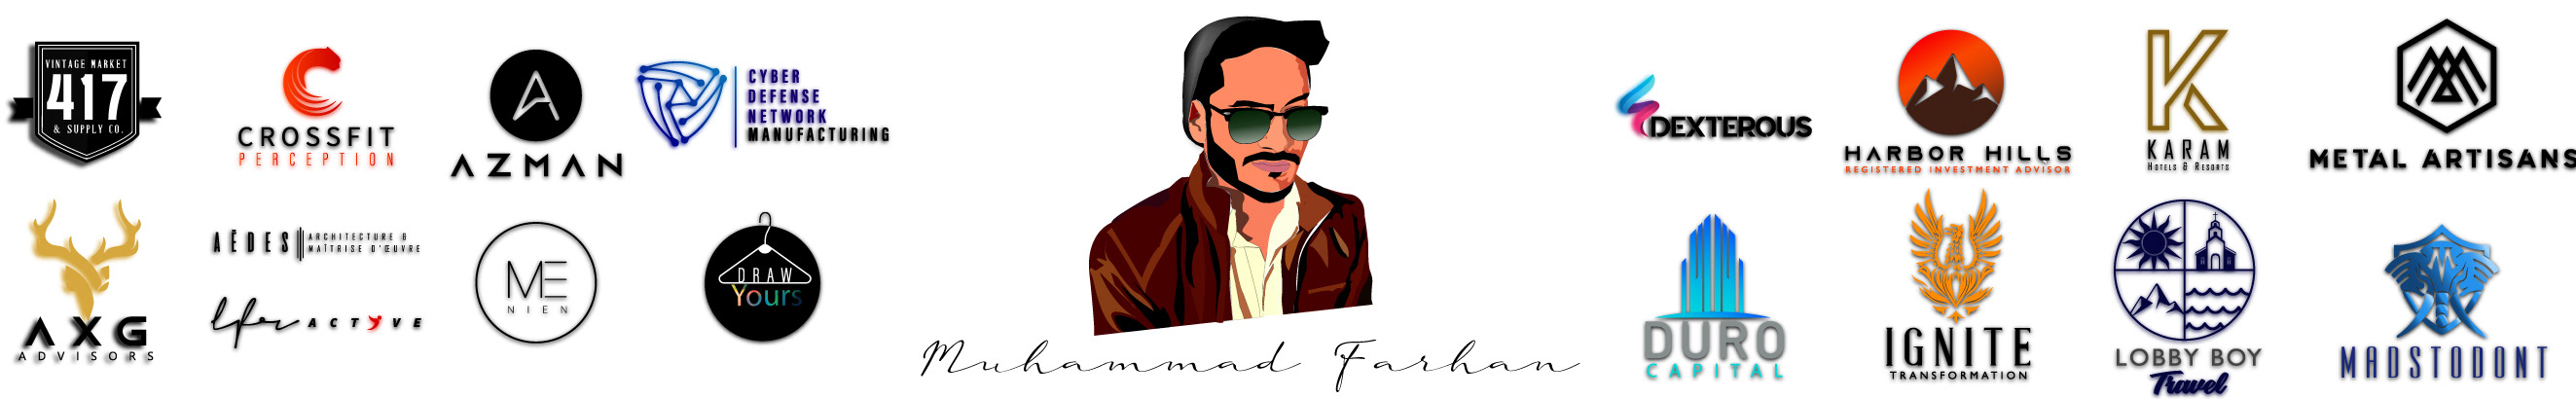 Muhammad Farhan's profile banner